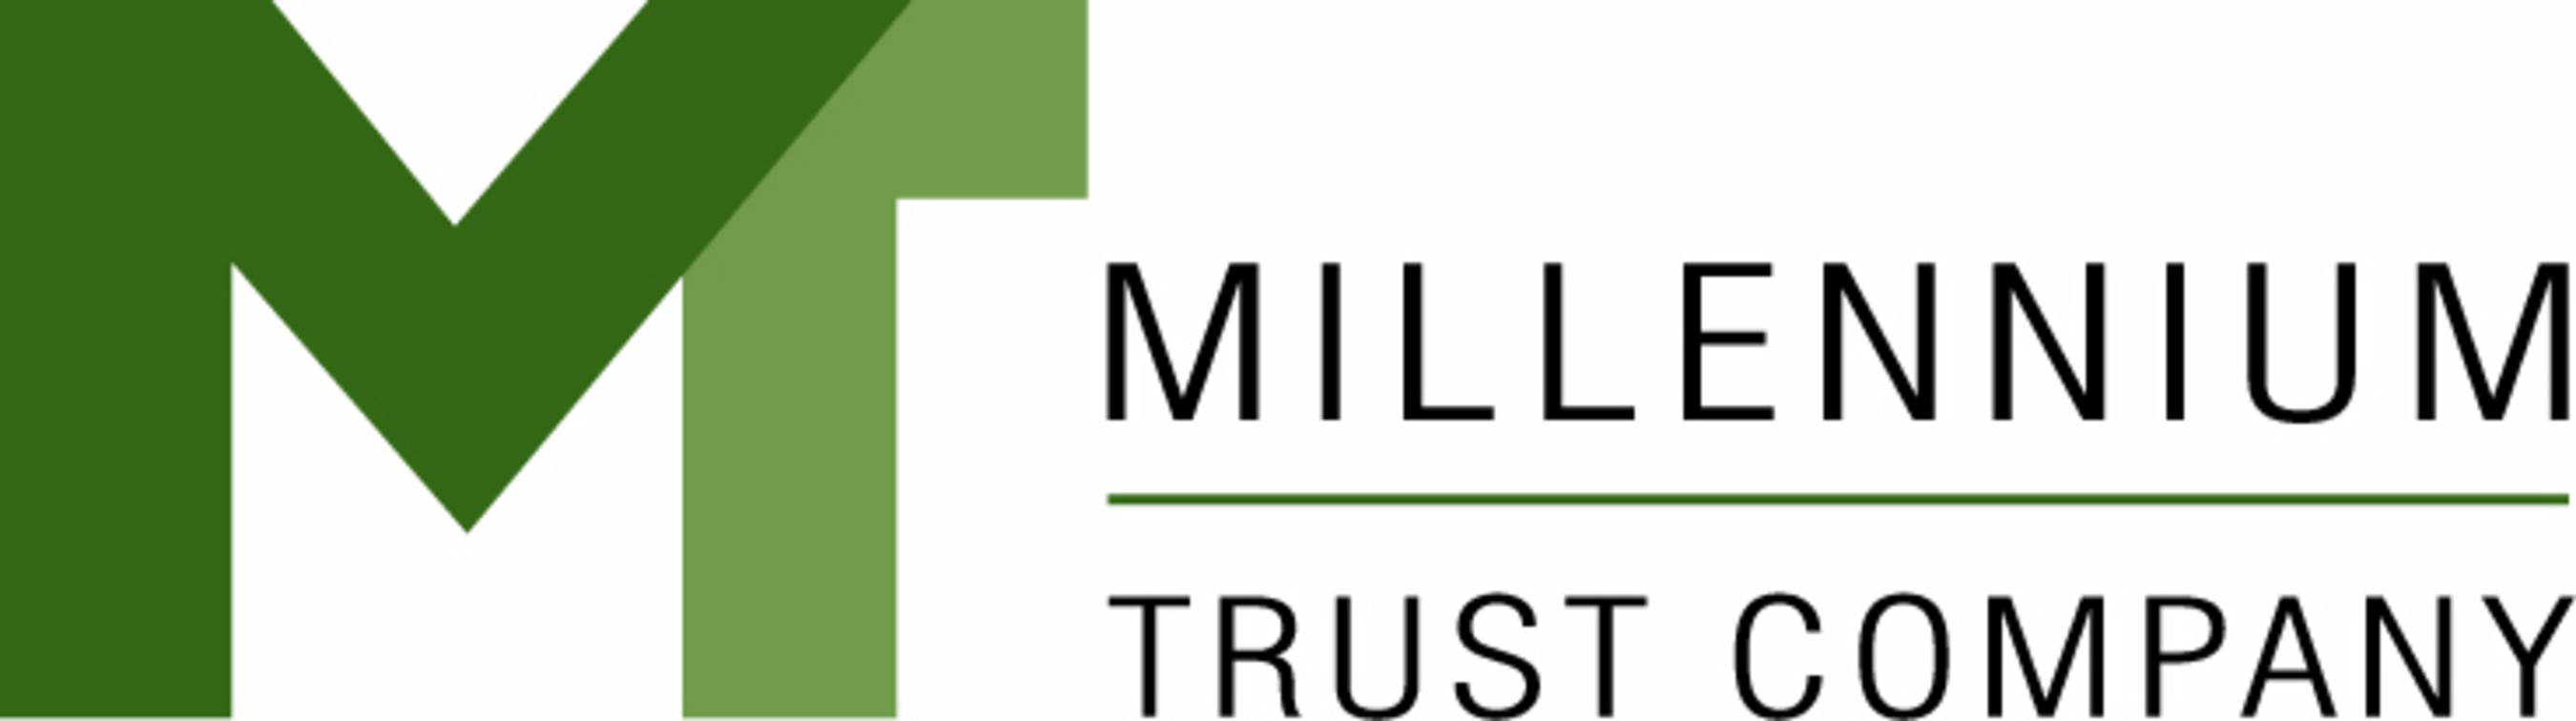 Millennium Trust Company (PRNewsFoto/Millennium Trust Company) (PRNewsFoto/Millennium Trust Company)